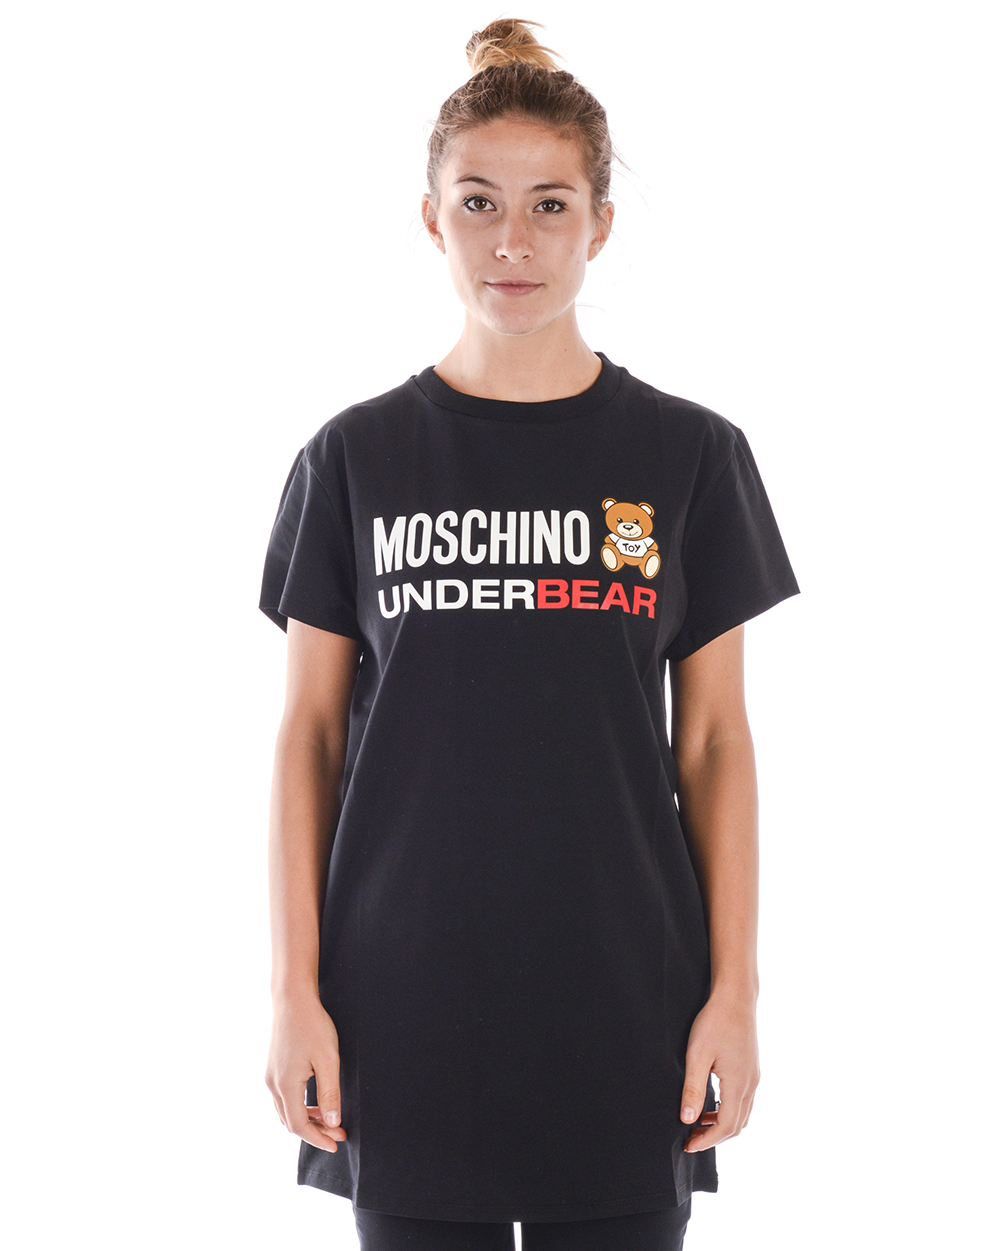 T shirt Moschino Underwear Sweatshirt Coton Femme Noir A19059002 555 TL. XS